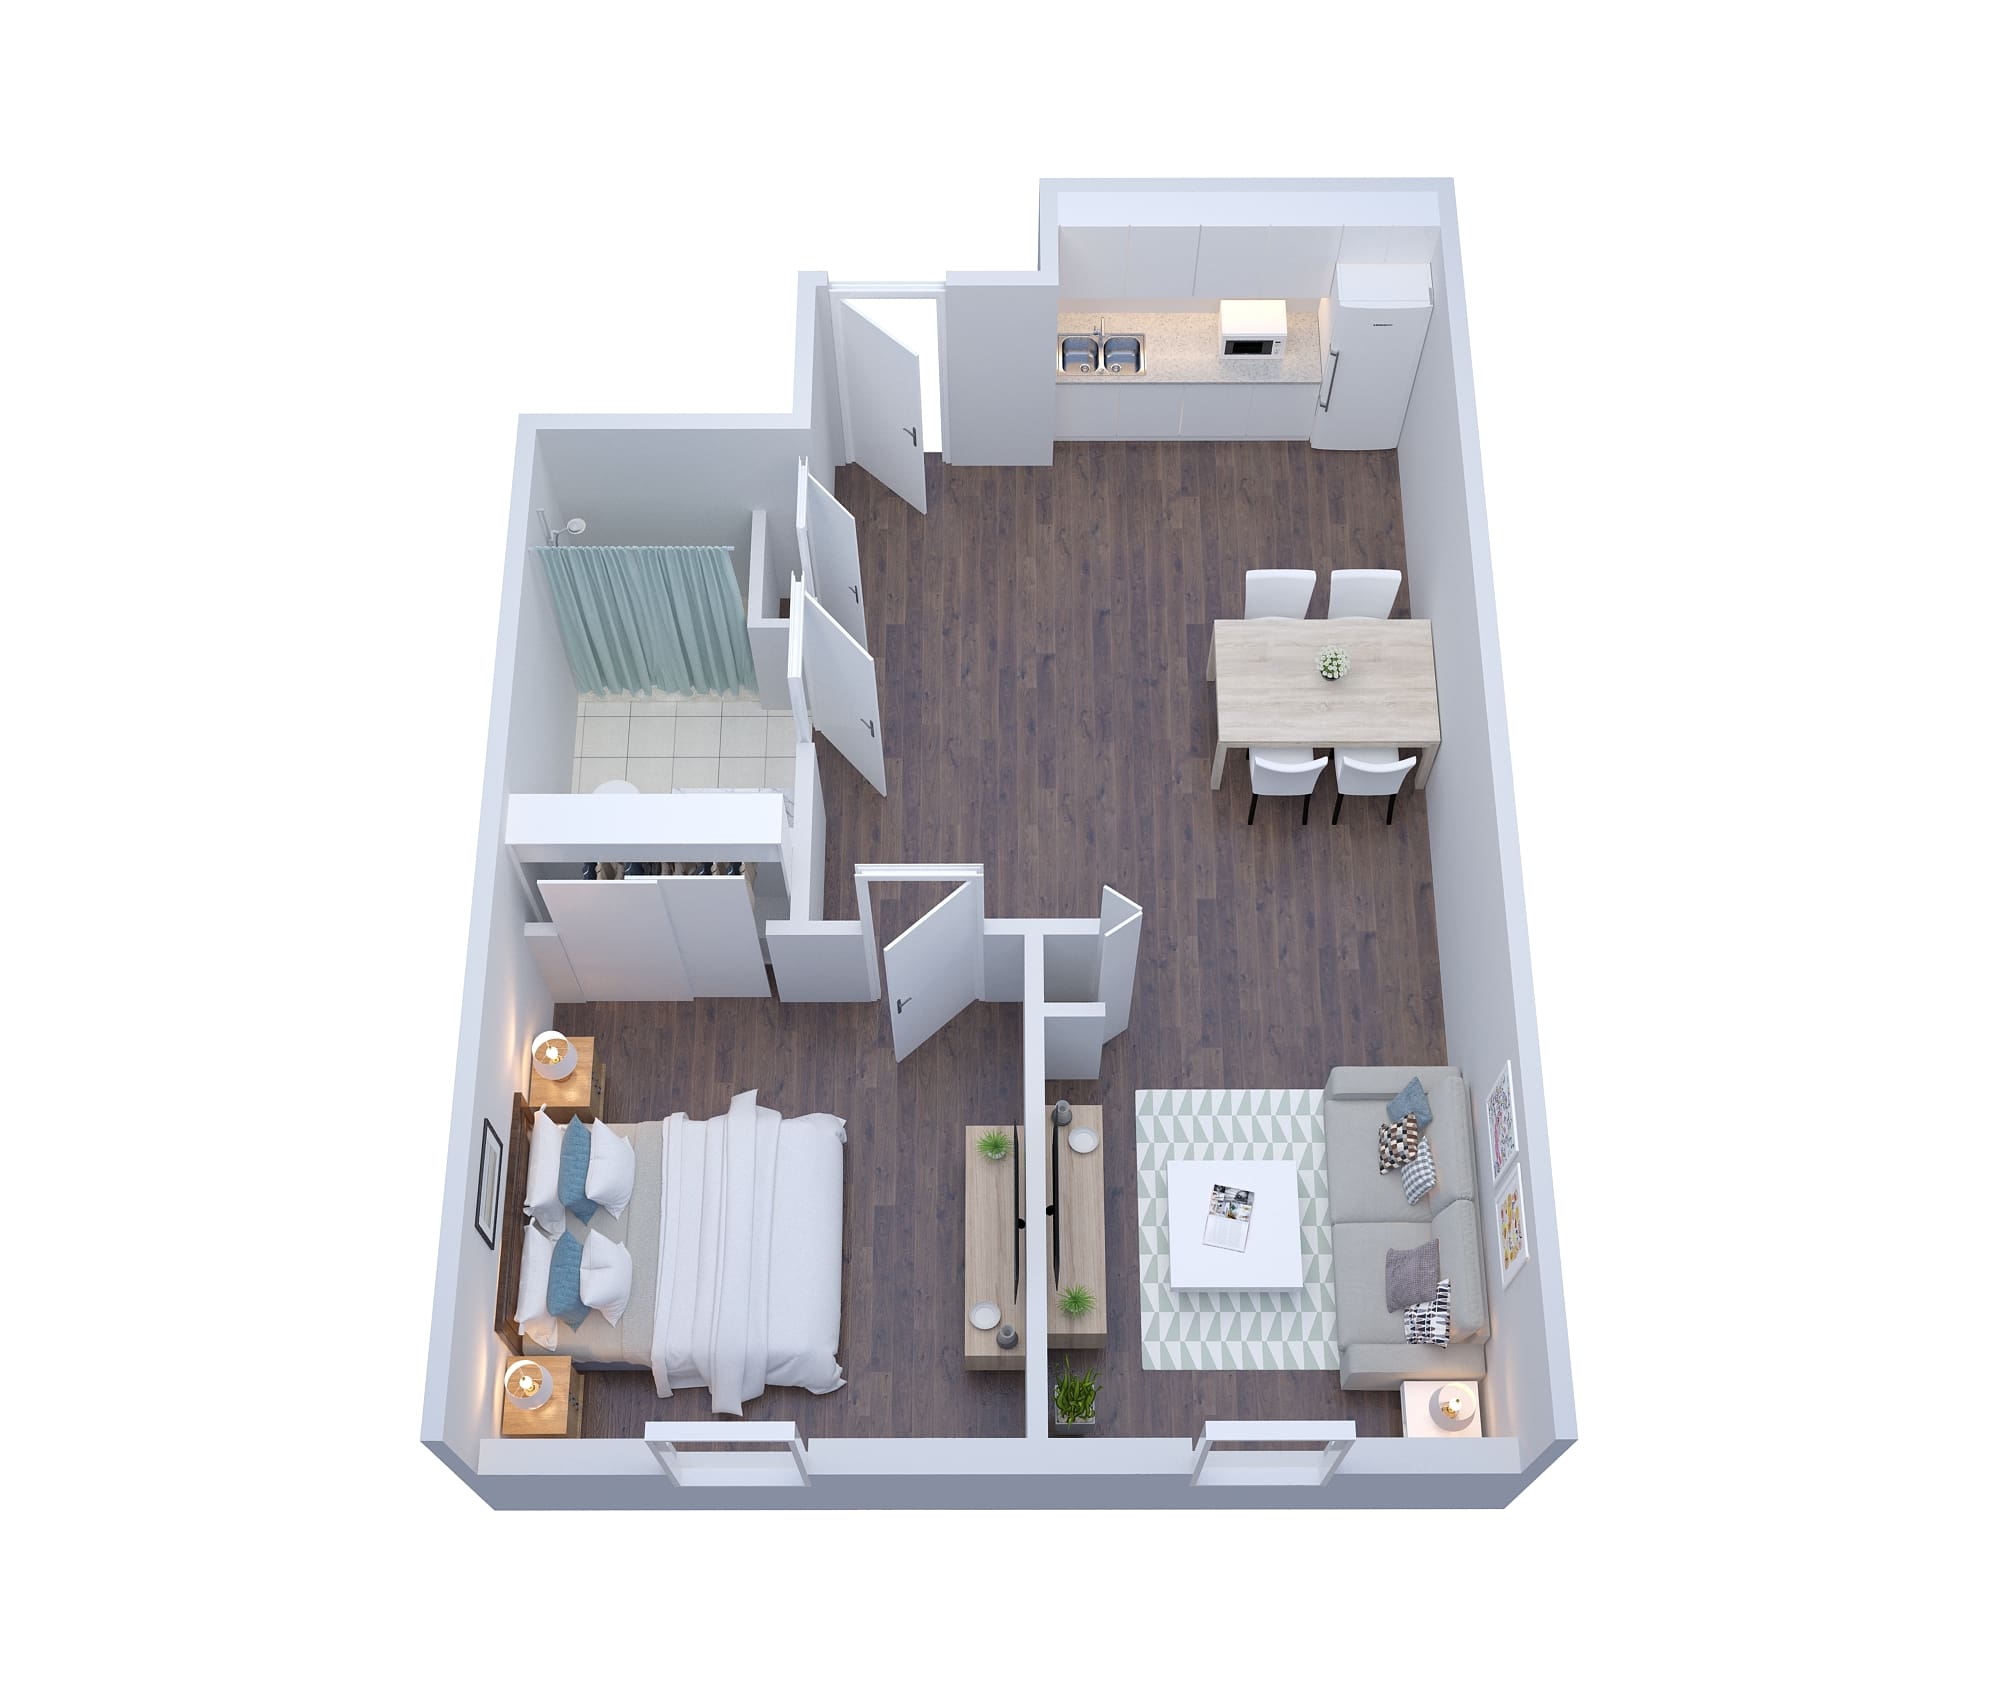 SHPP Frederick One Bedroom One Bathroom - senior living floor plan